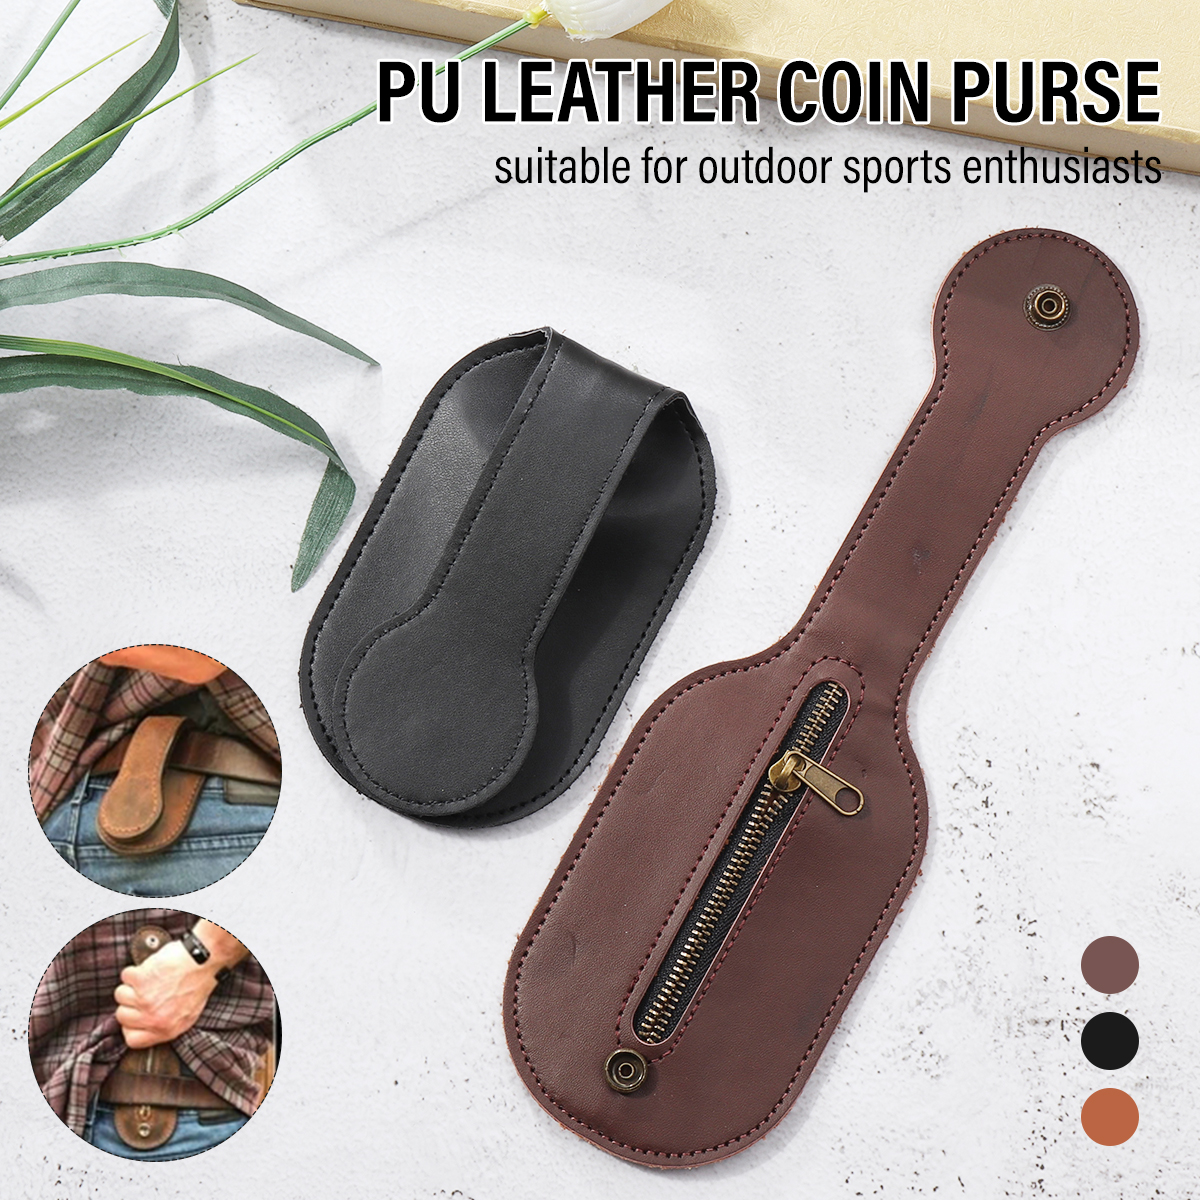 PU-Leather-Coin-Purse-Outdoor-Waist-Belt-Hanging-EDC-Storage-Bag-Carrier-Bag-1713325-1